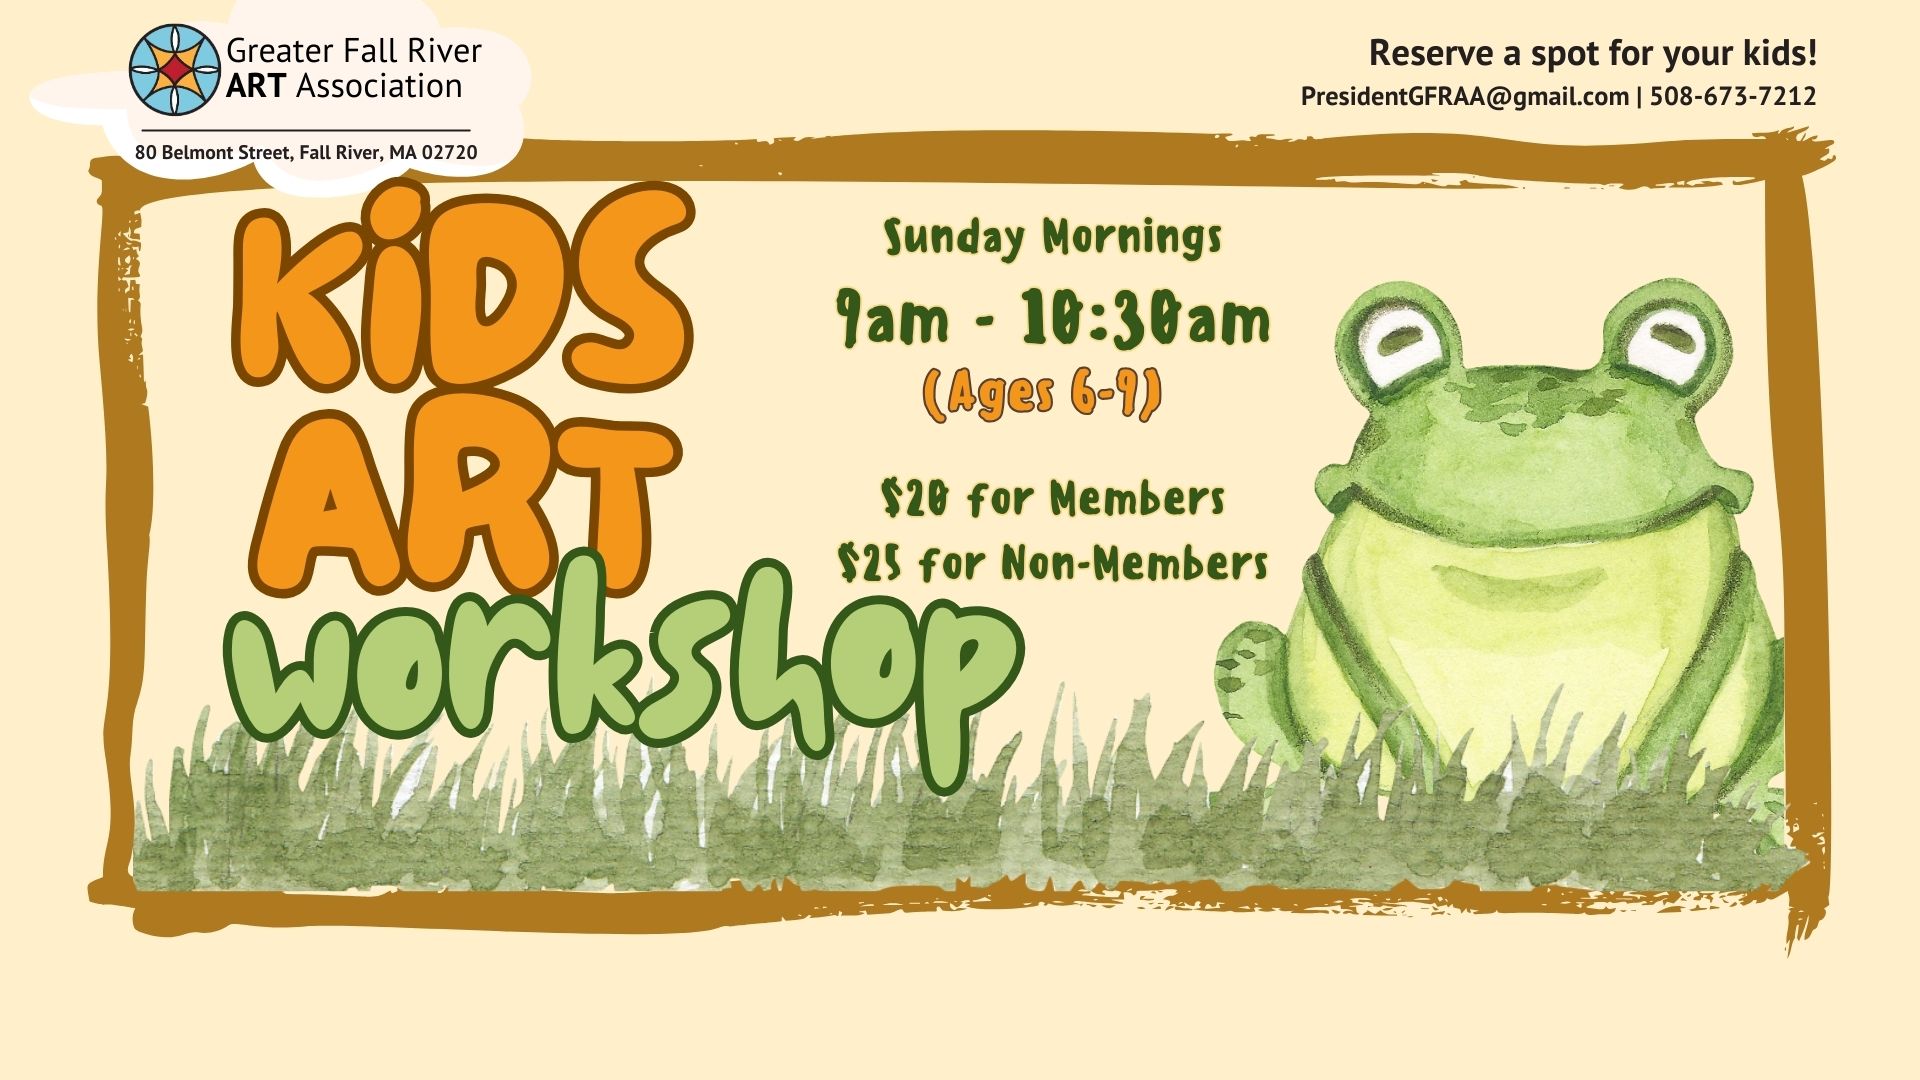 Kids Art Workshop offered on Sundays at GFRAA